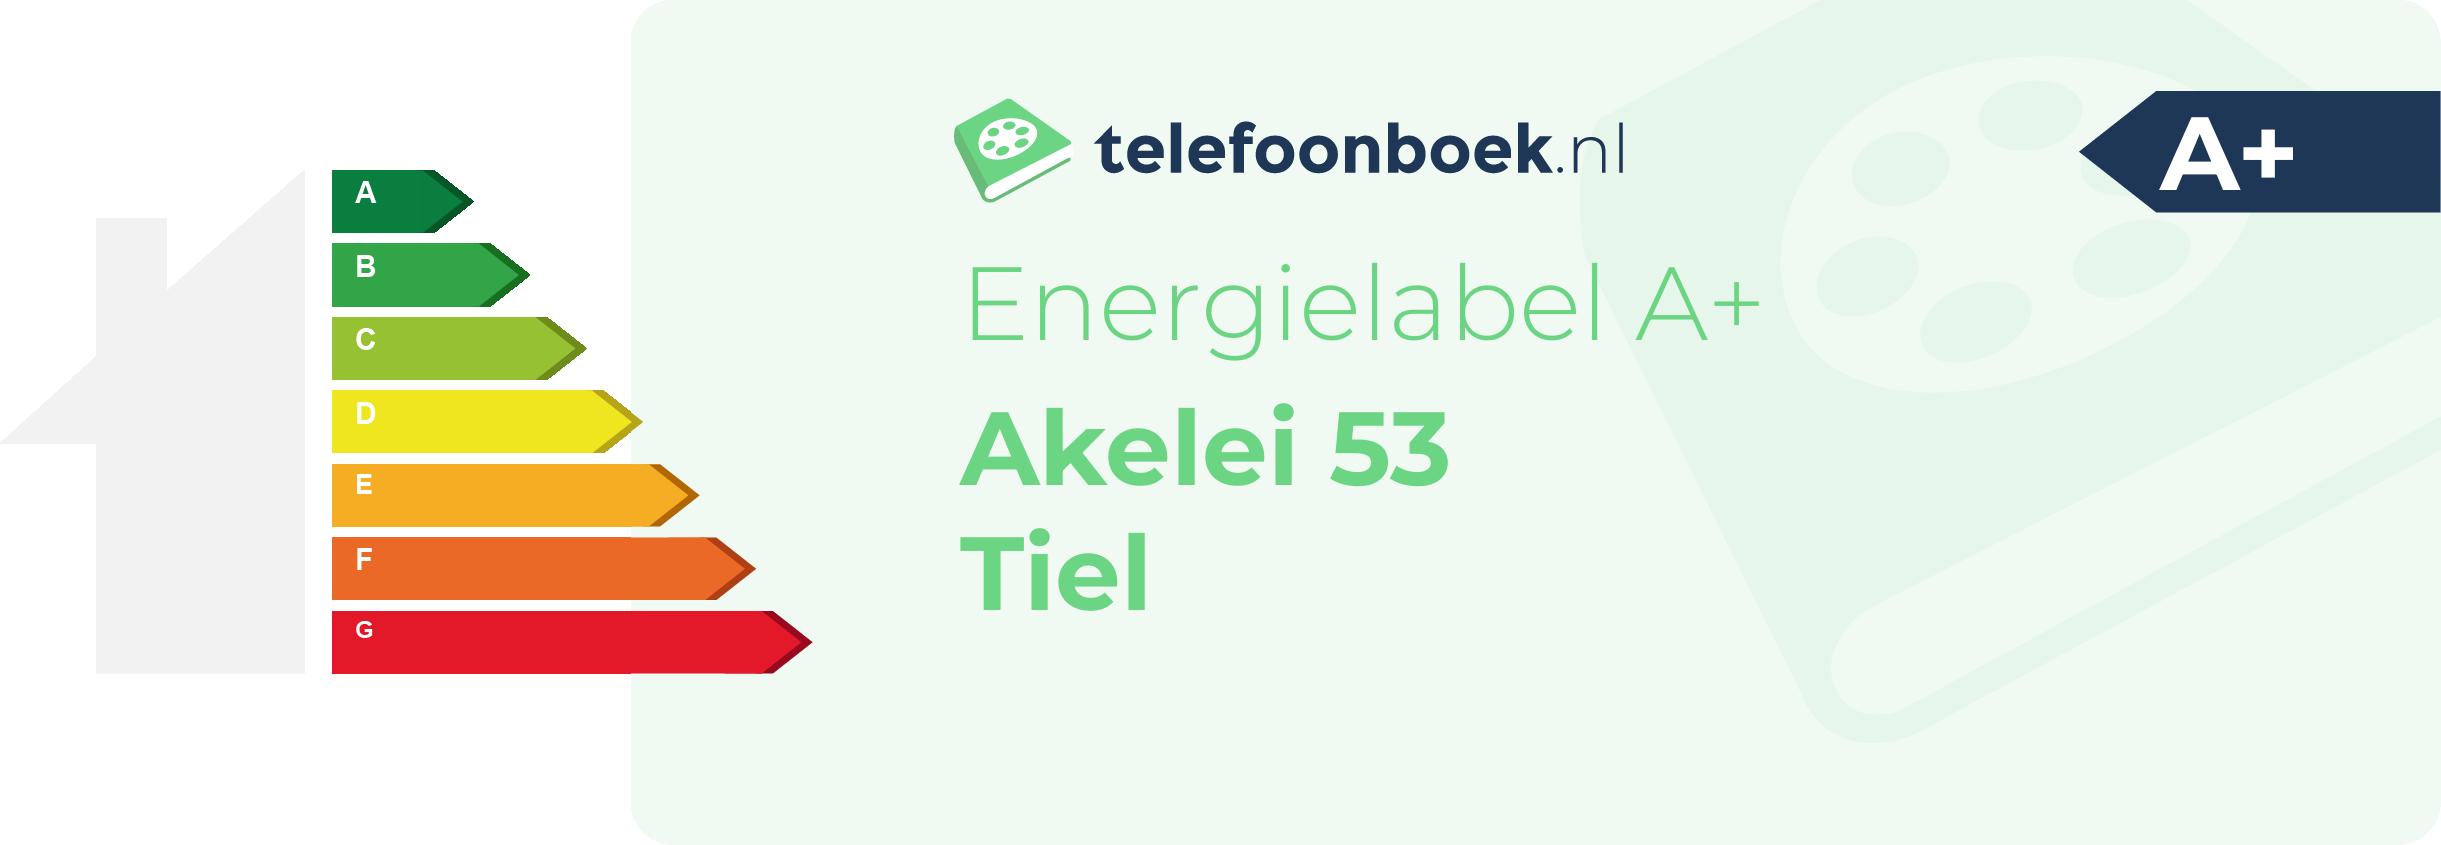 Energielabel Akelei 53 Tiel